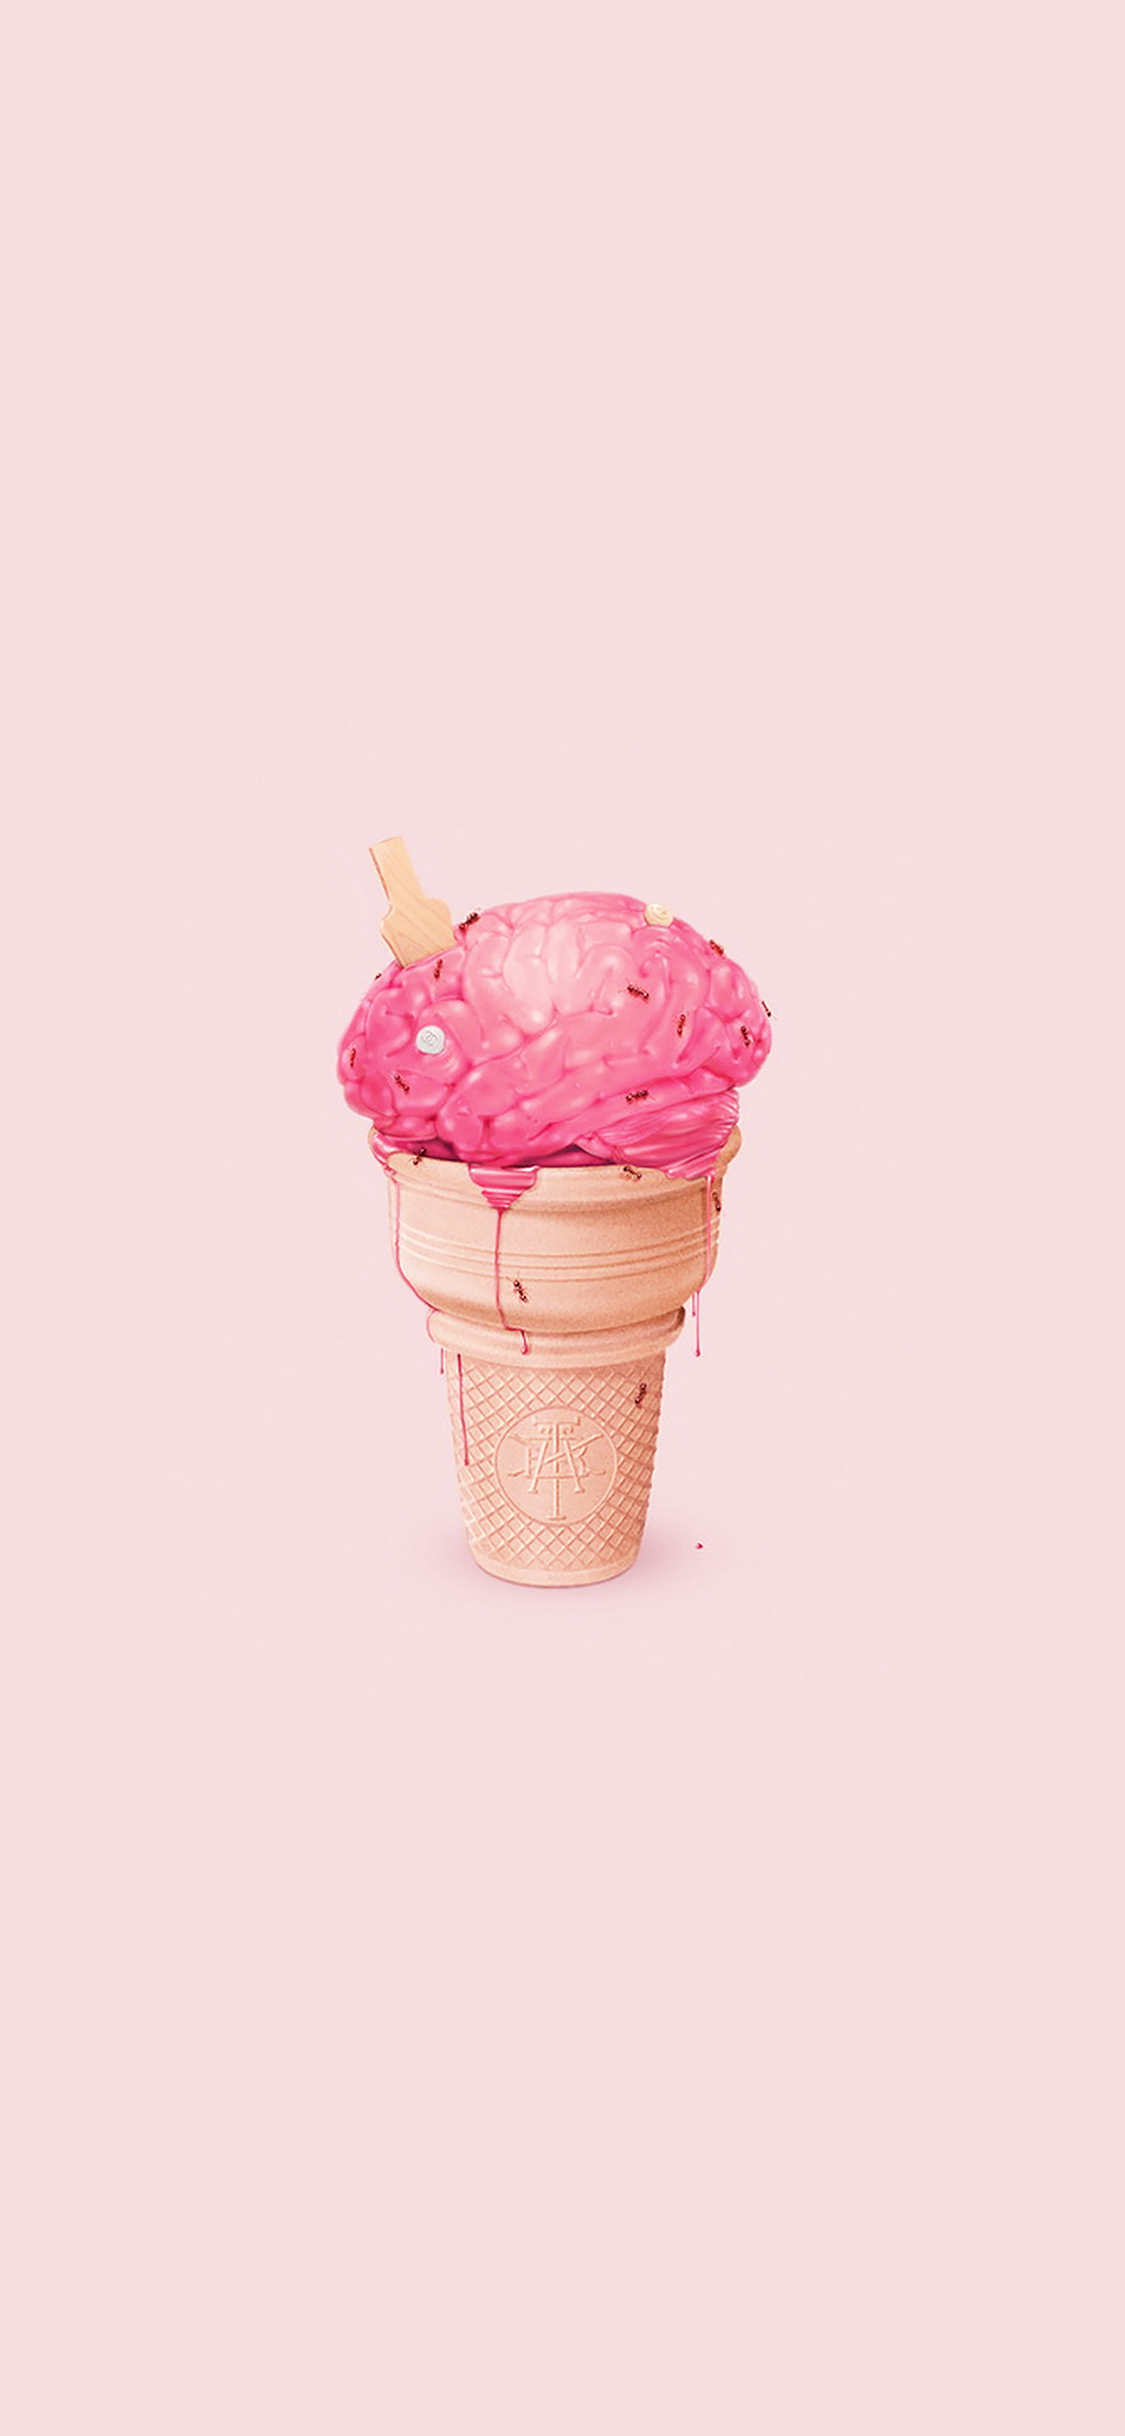 iPhone X wallpaper. brain icecream illust art cute pink